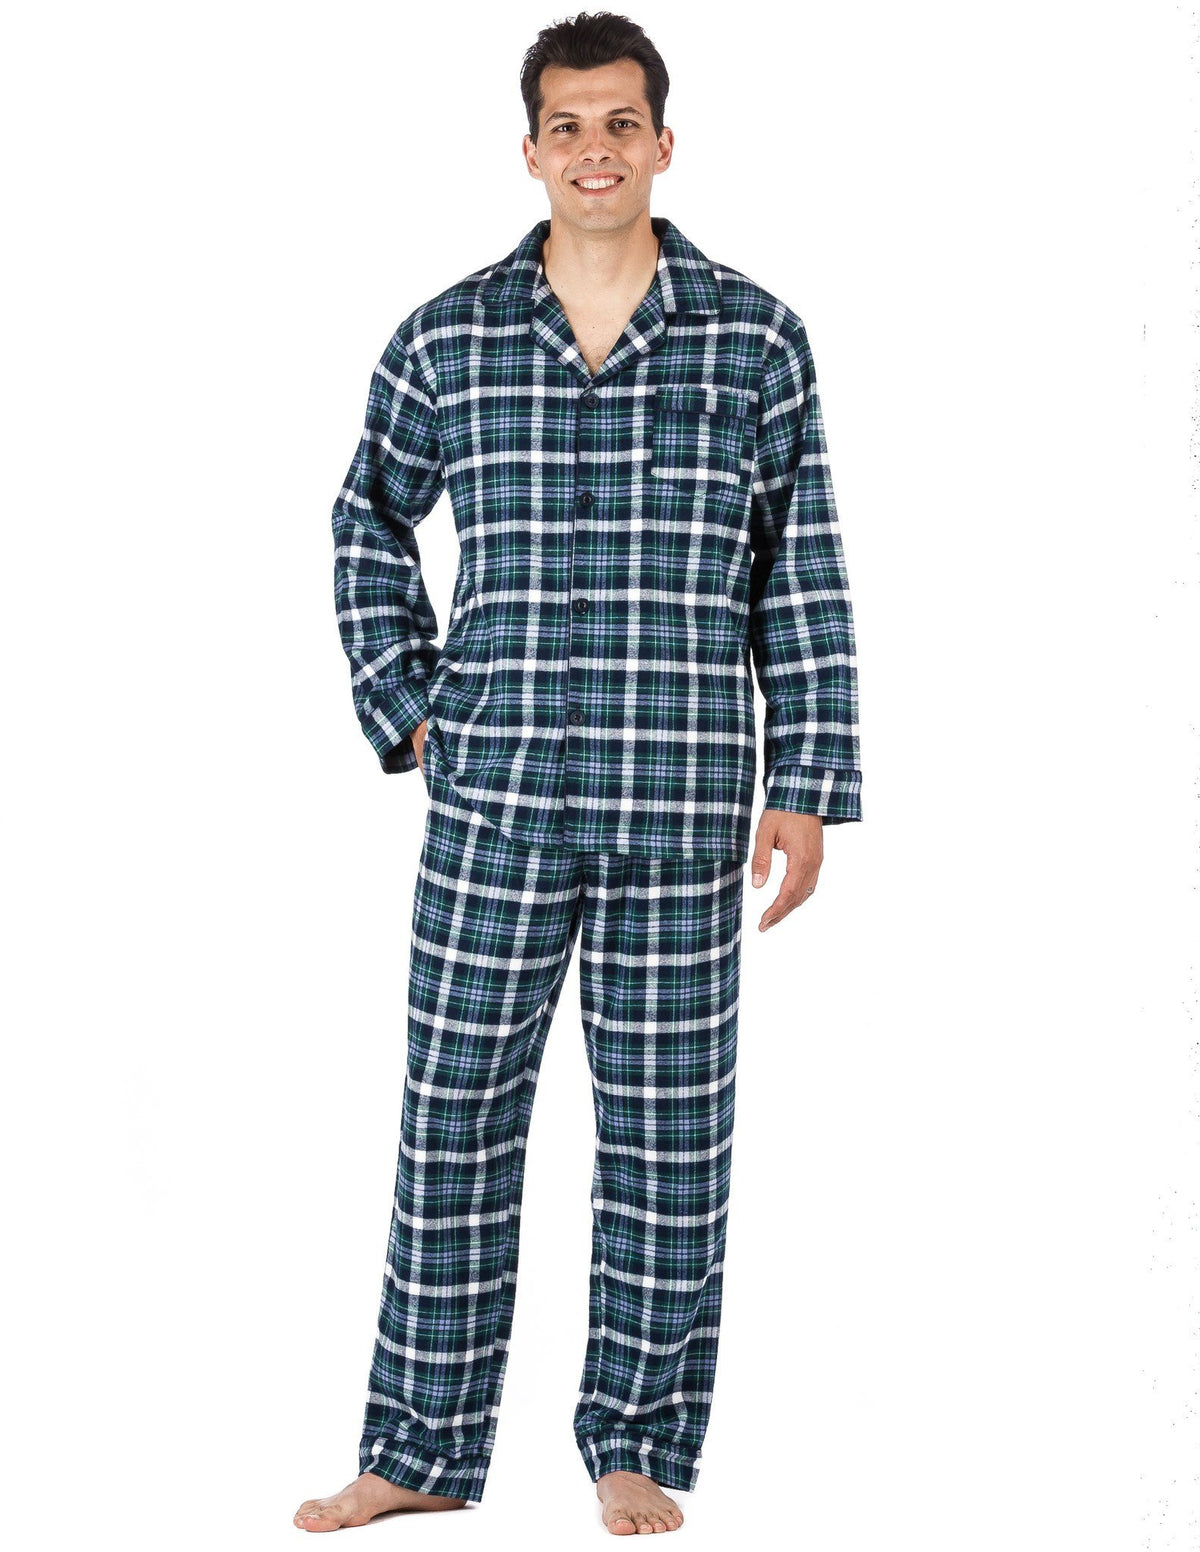 Men's Premium 100% Cotton Flannel Pajama Sleepwear Set (Relaxed Fit) - Blue/Aqua Plaid